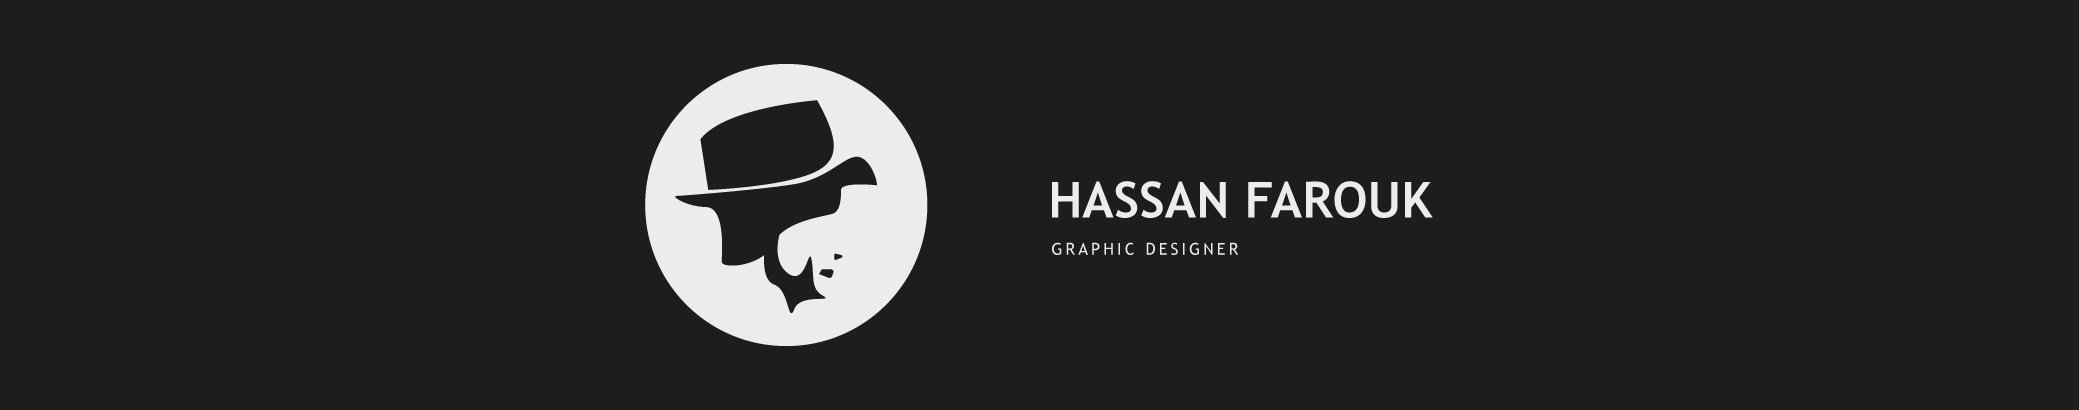 Hassan Farouks profilbanner